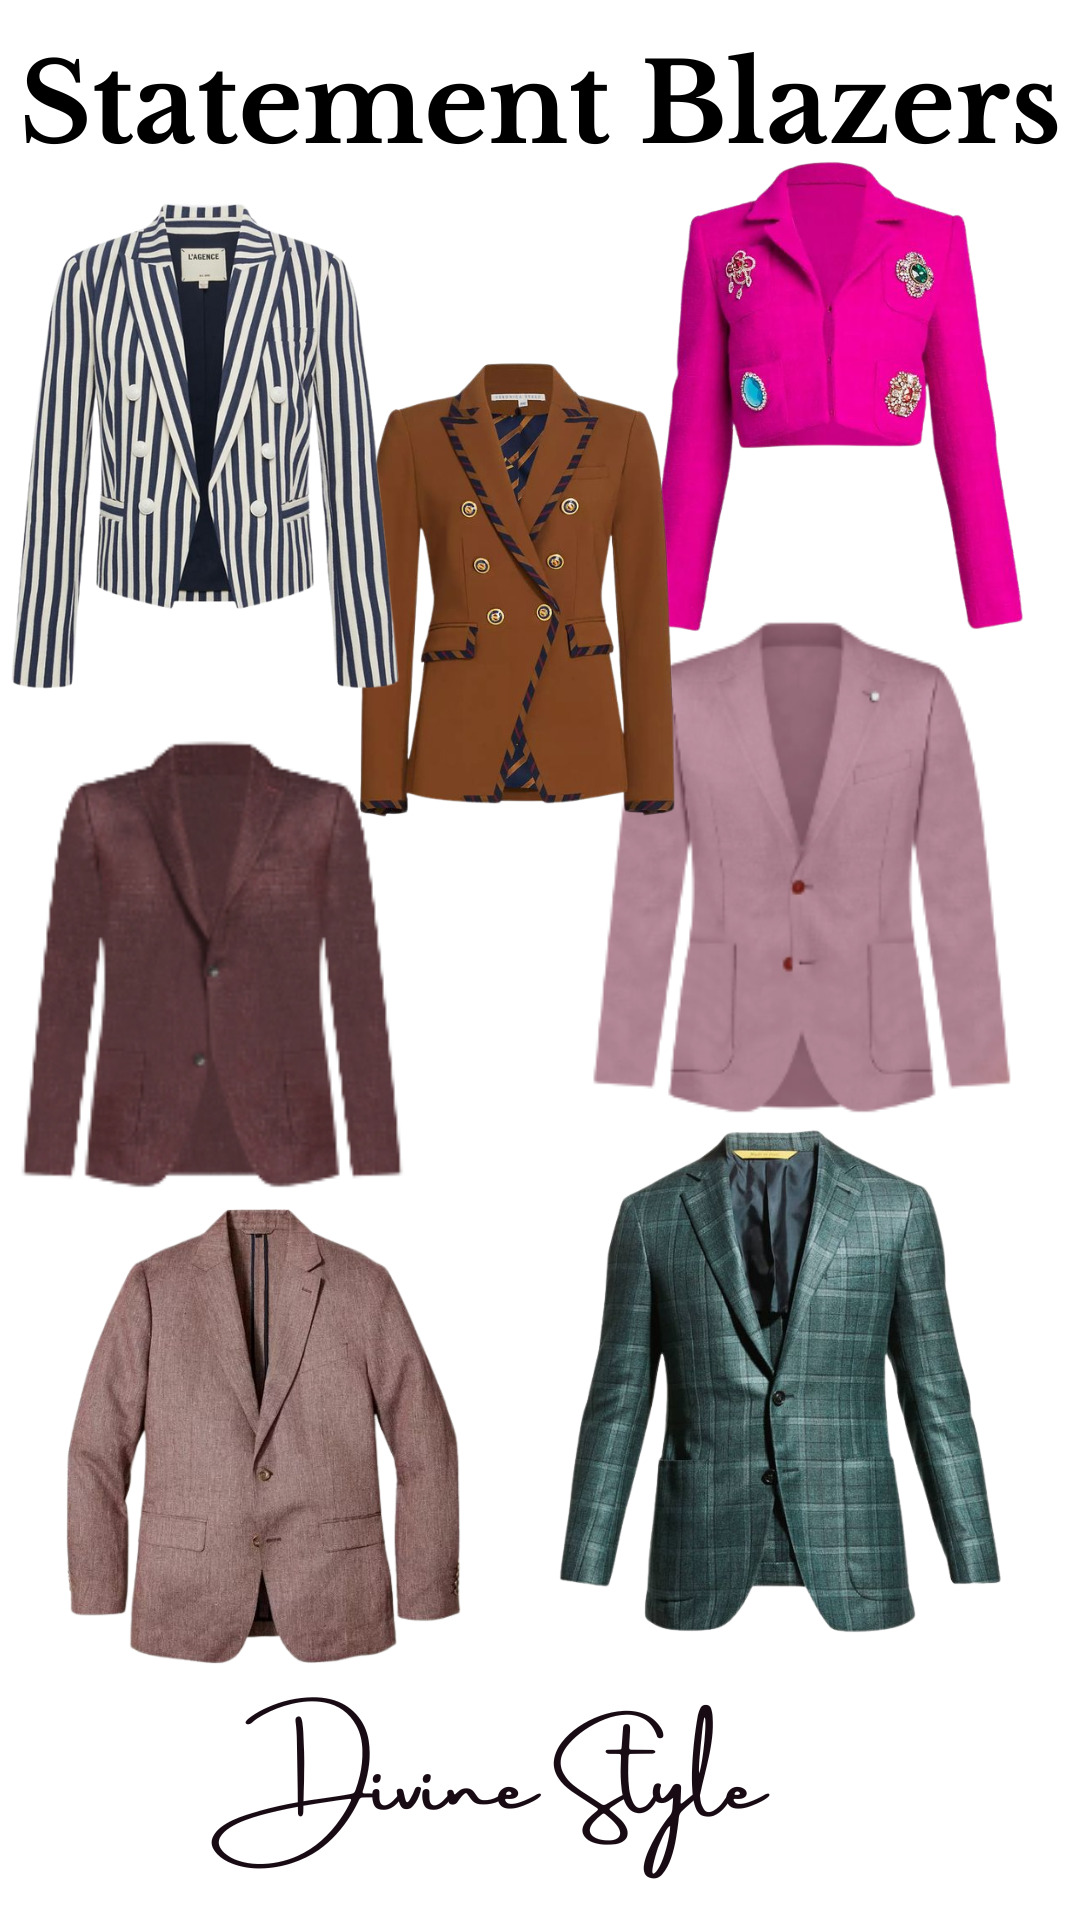 5 Key Autumn Pieces to Own | Statement blazers, fall women's blazers, fall men's blazers